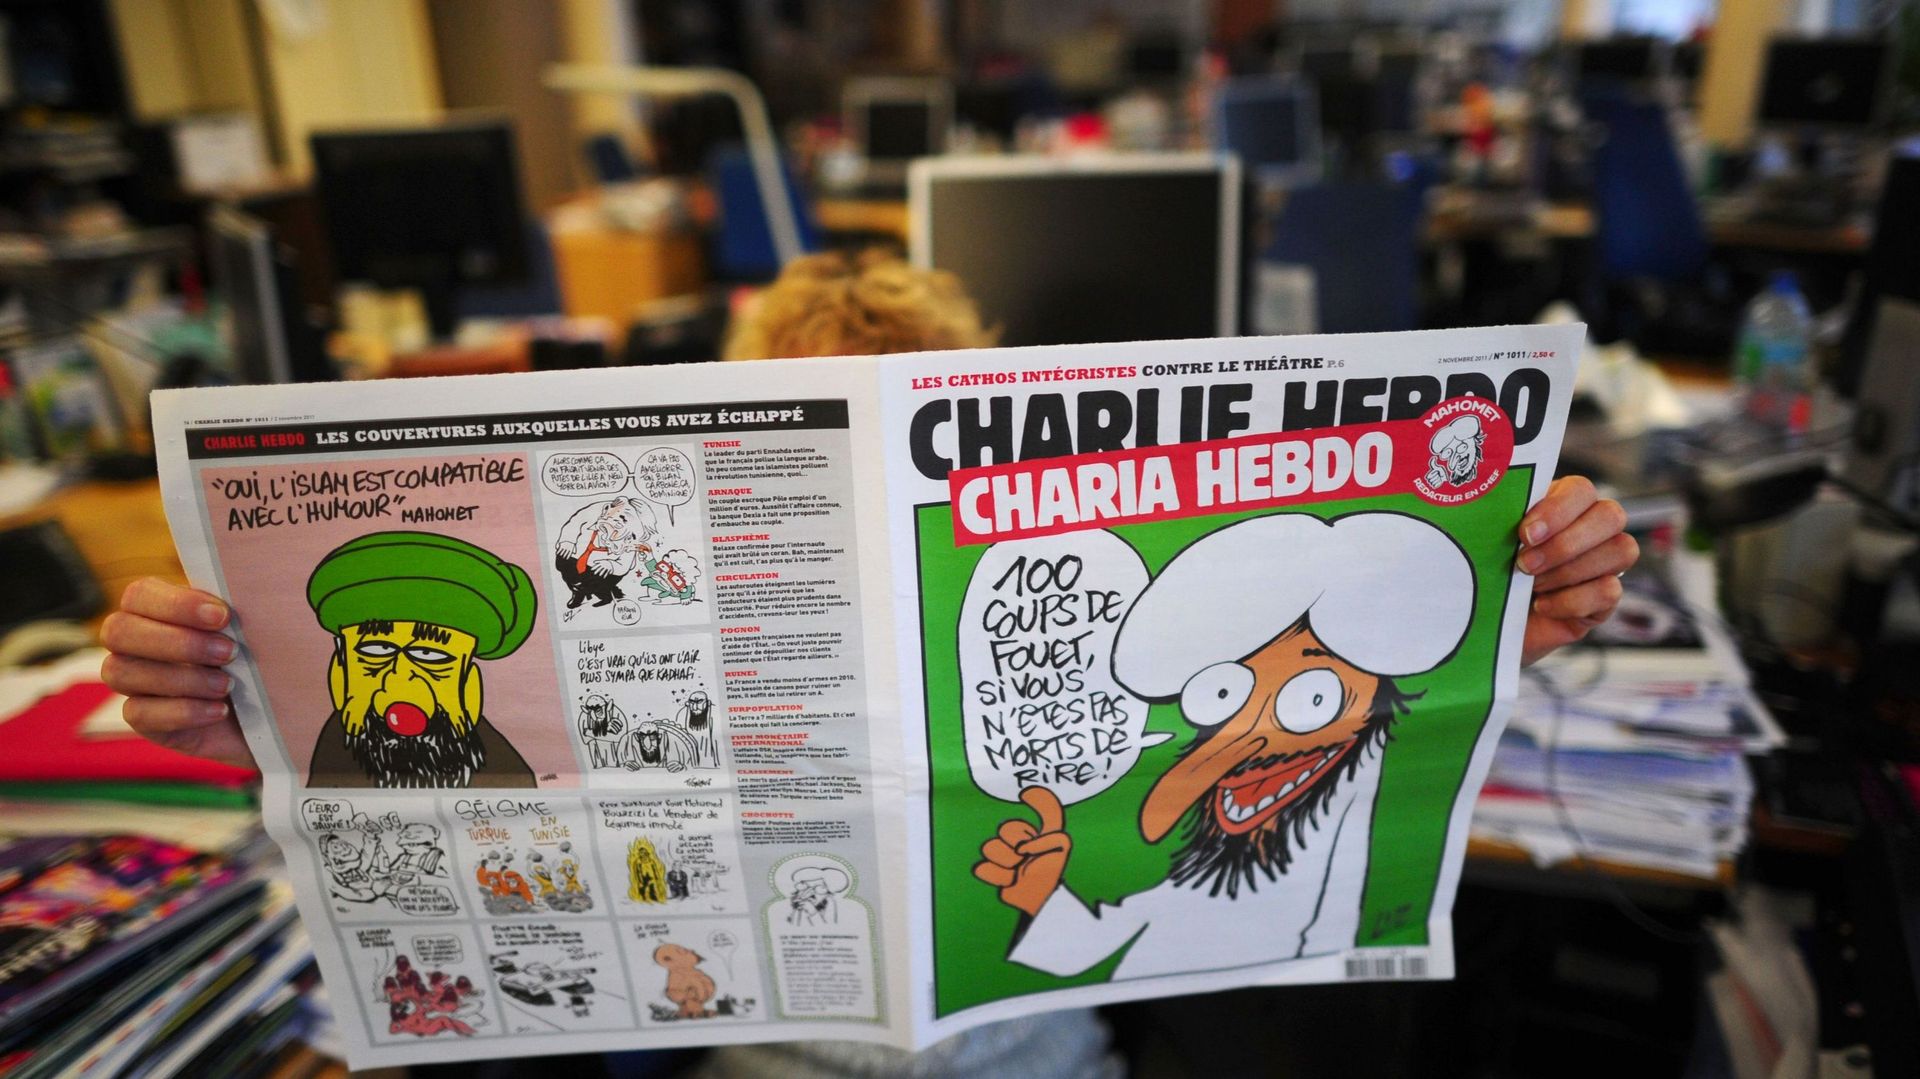 Charlie Hebdo: les pays arabes condamnent l'attaque "avec force"